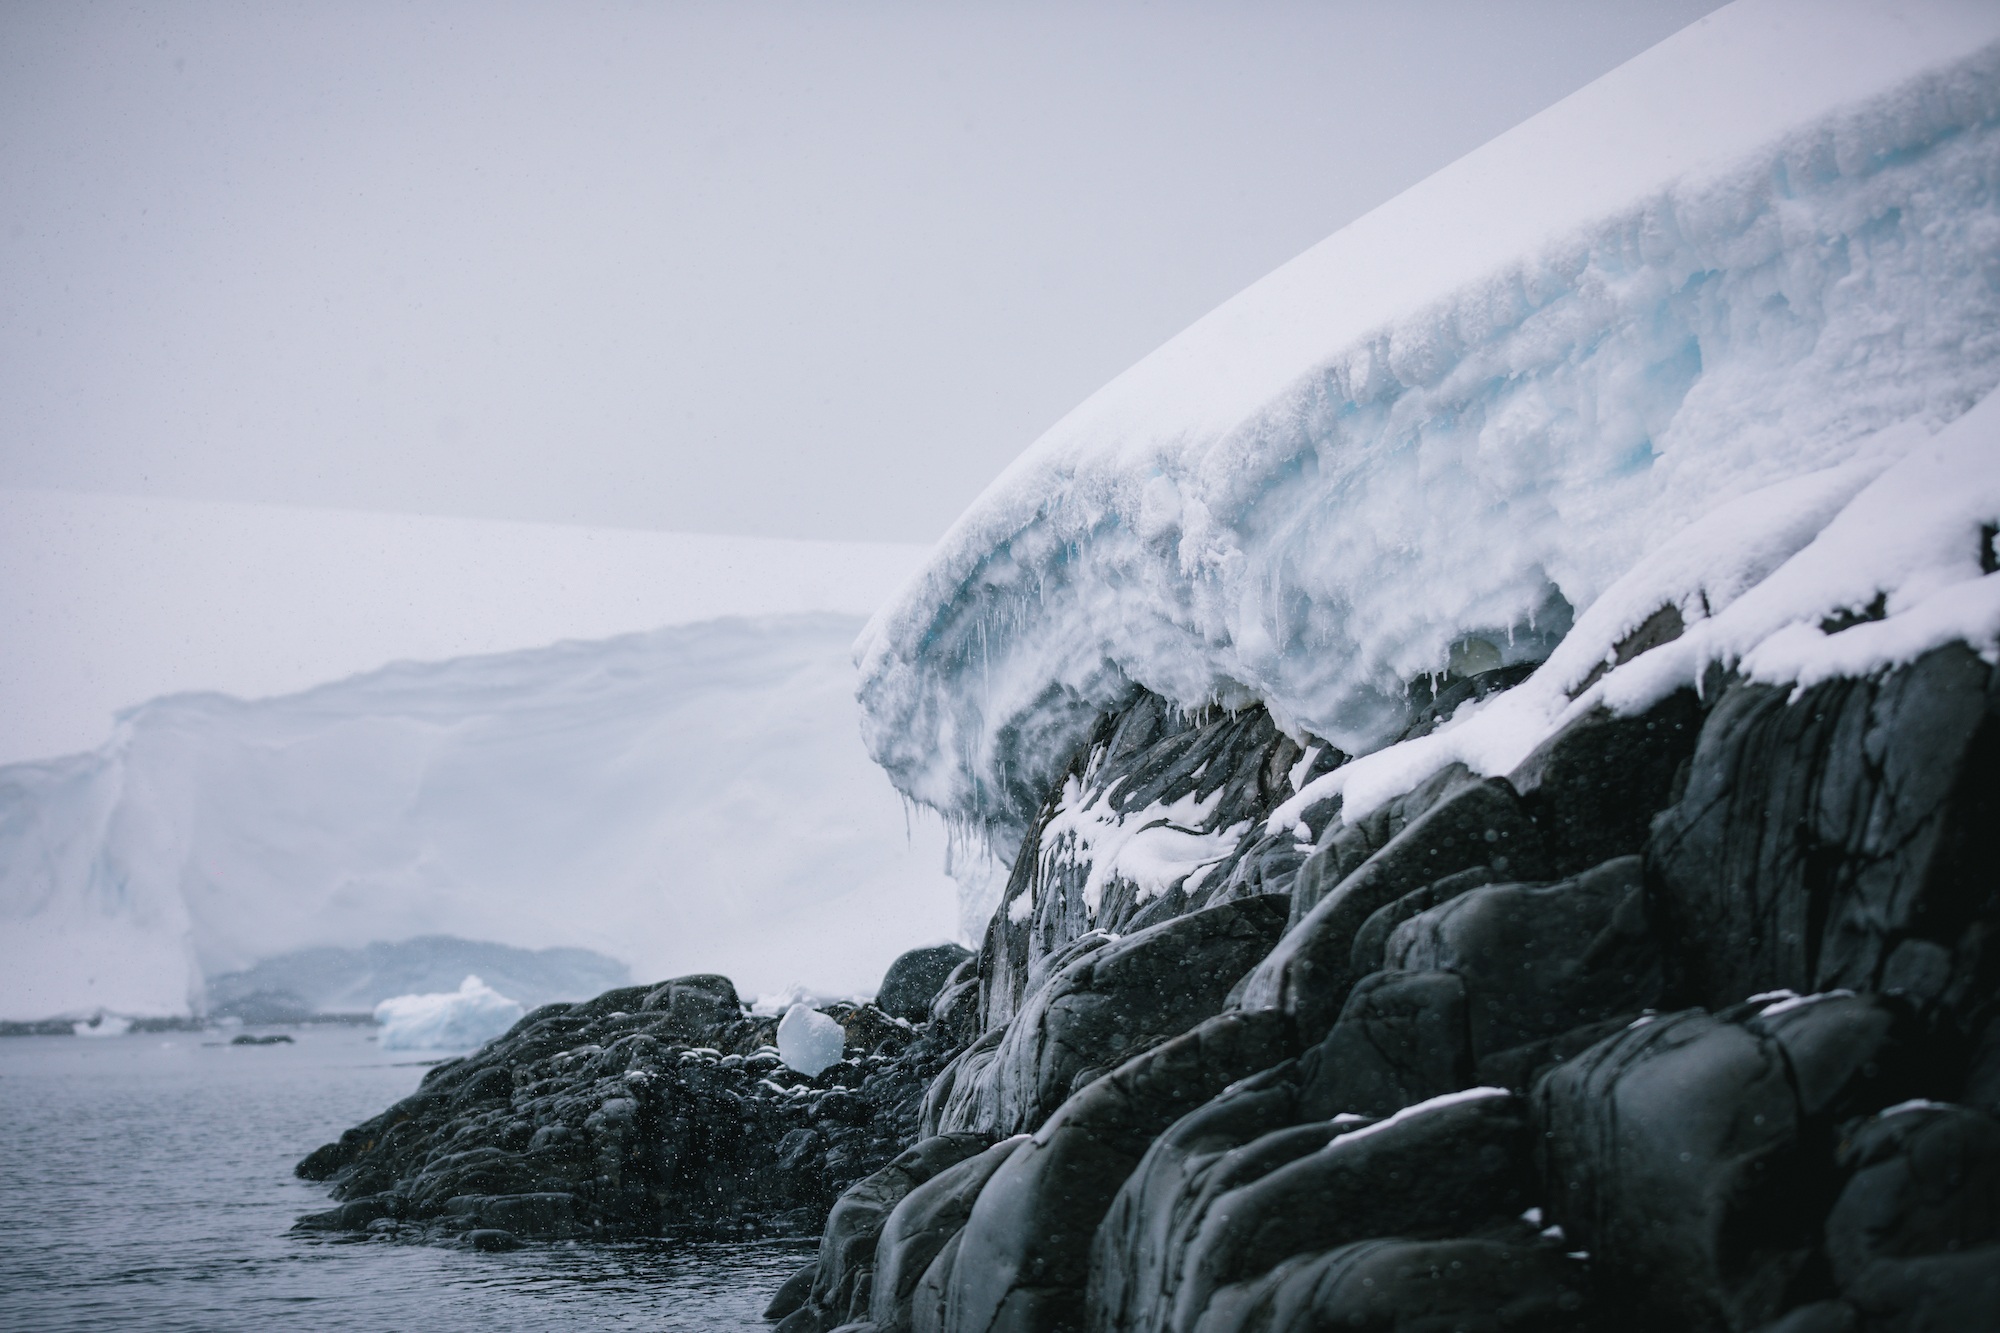 antarctica photos